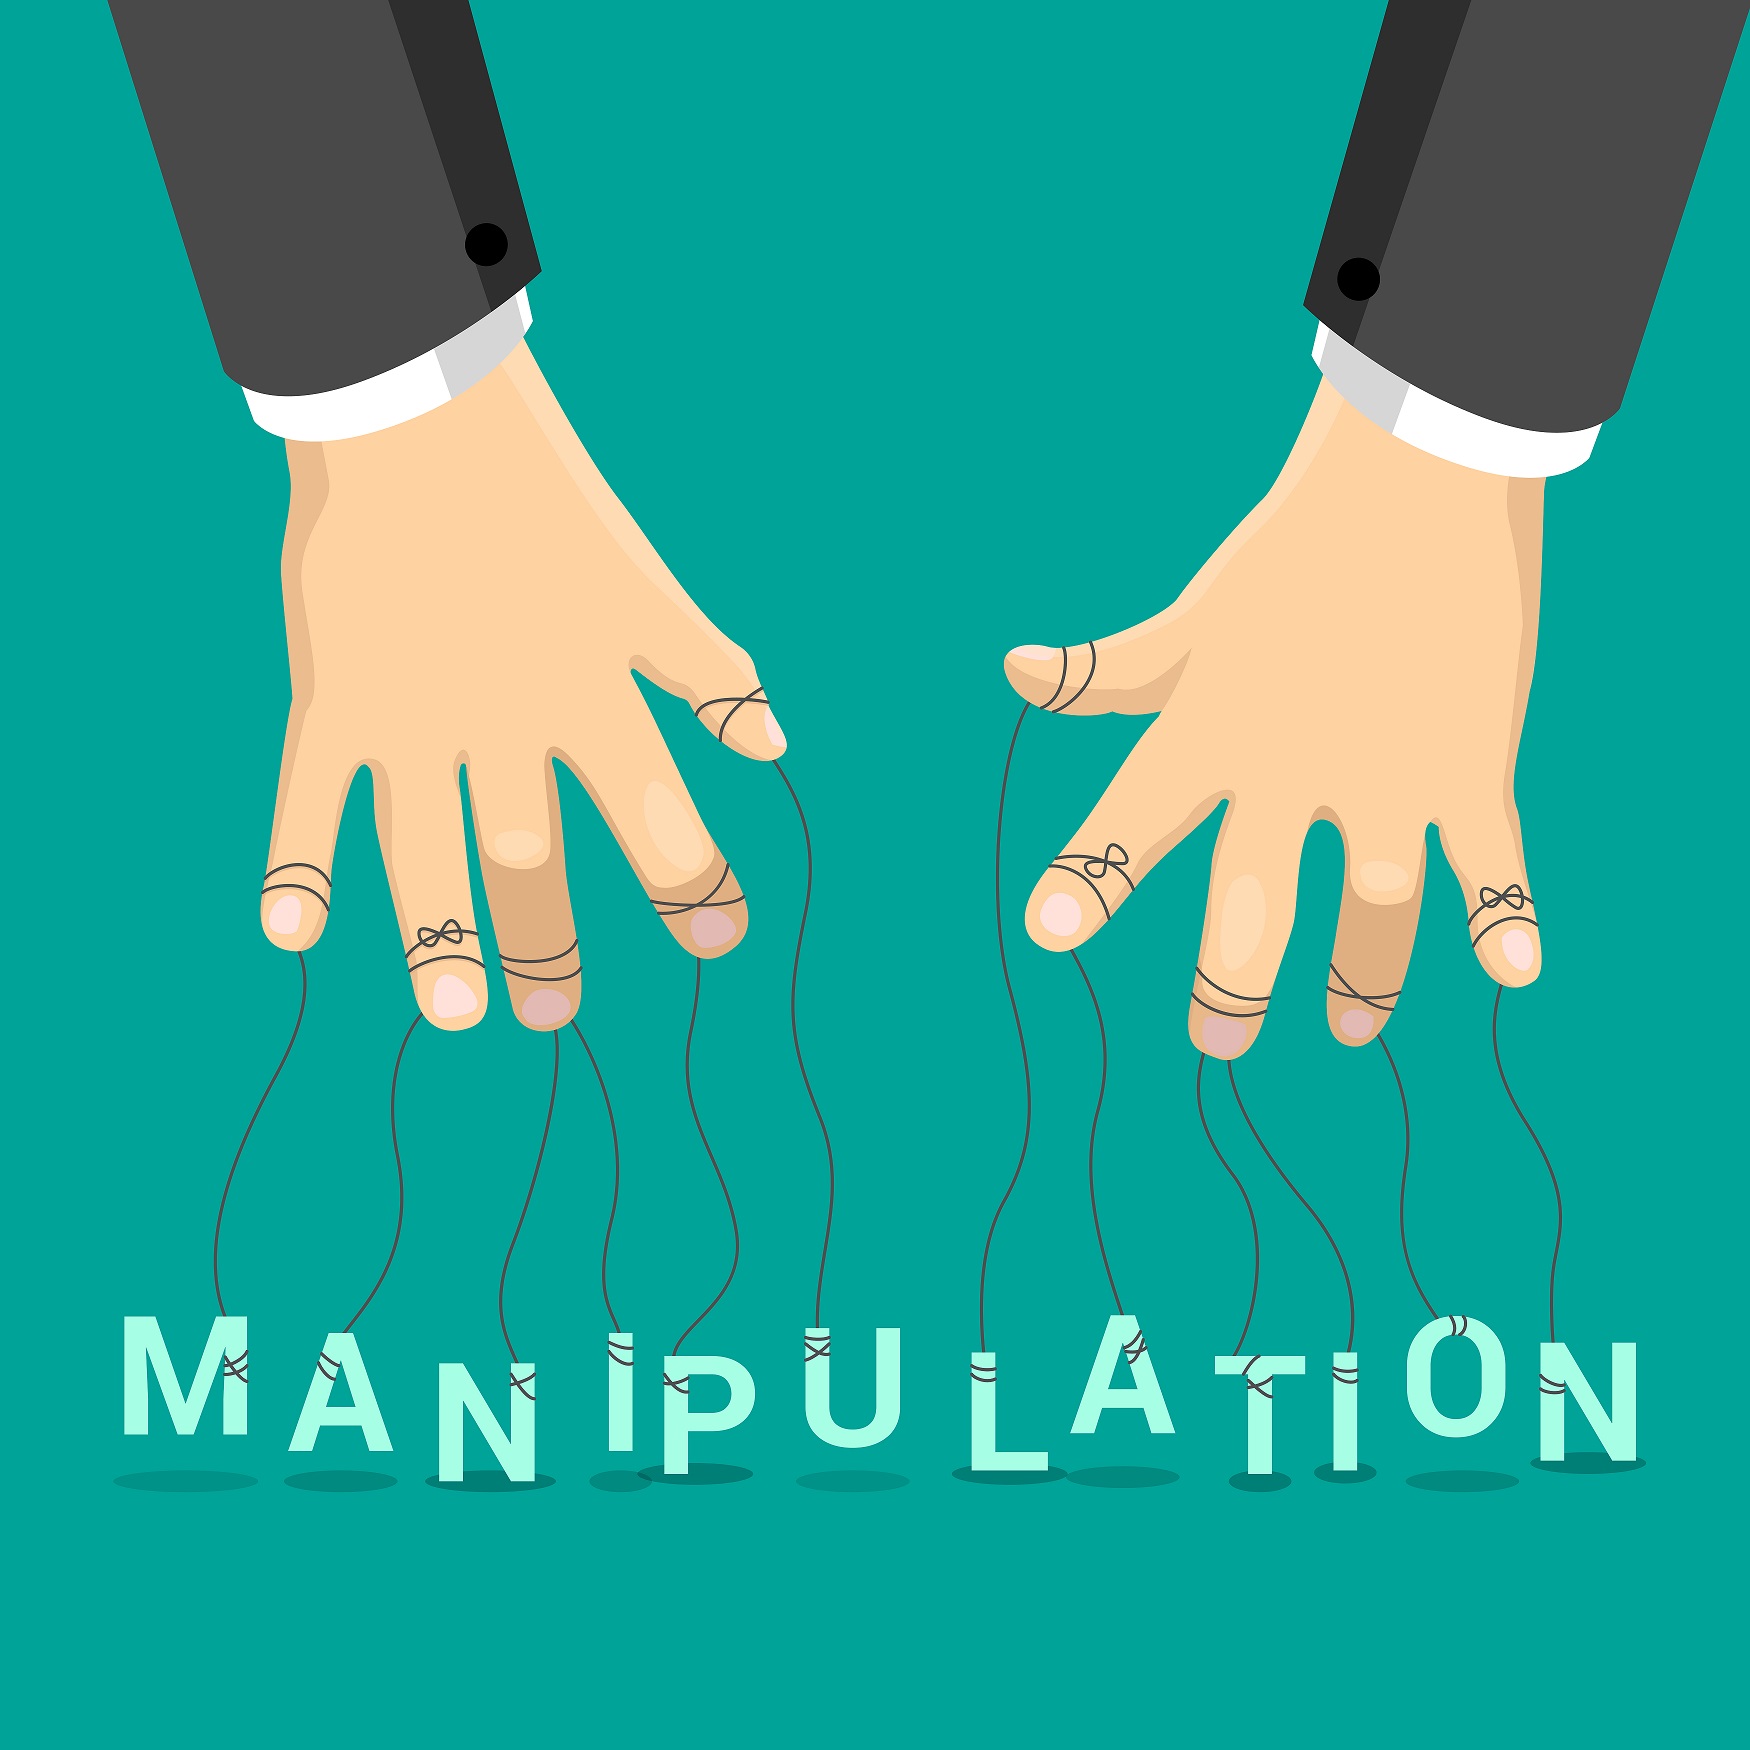 The technologies of manipulation